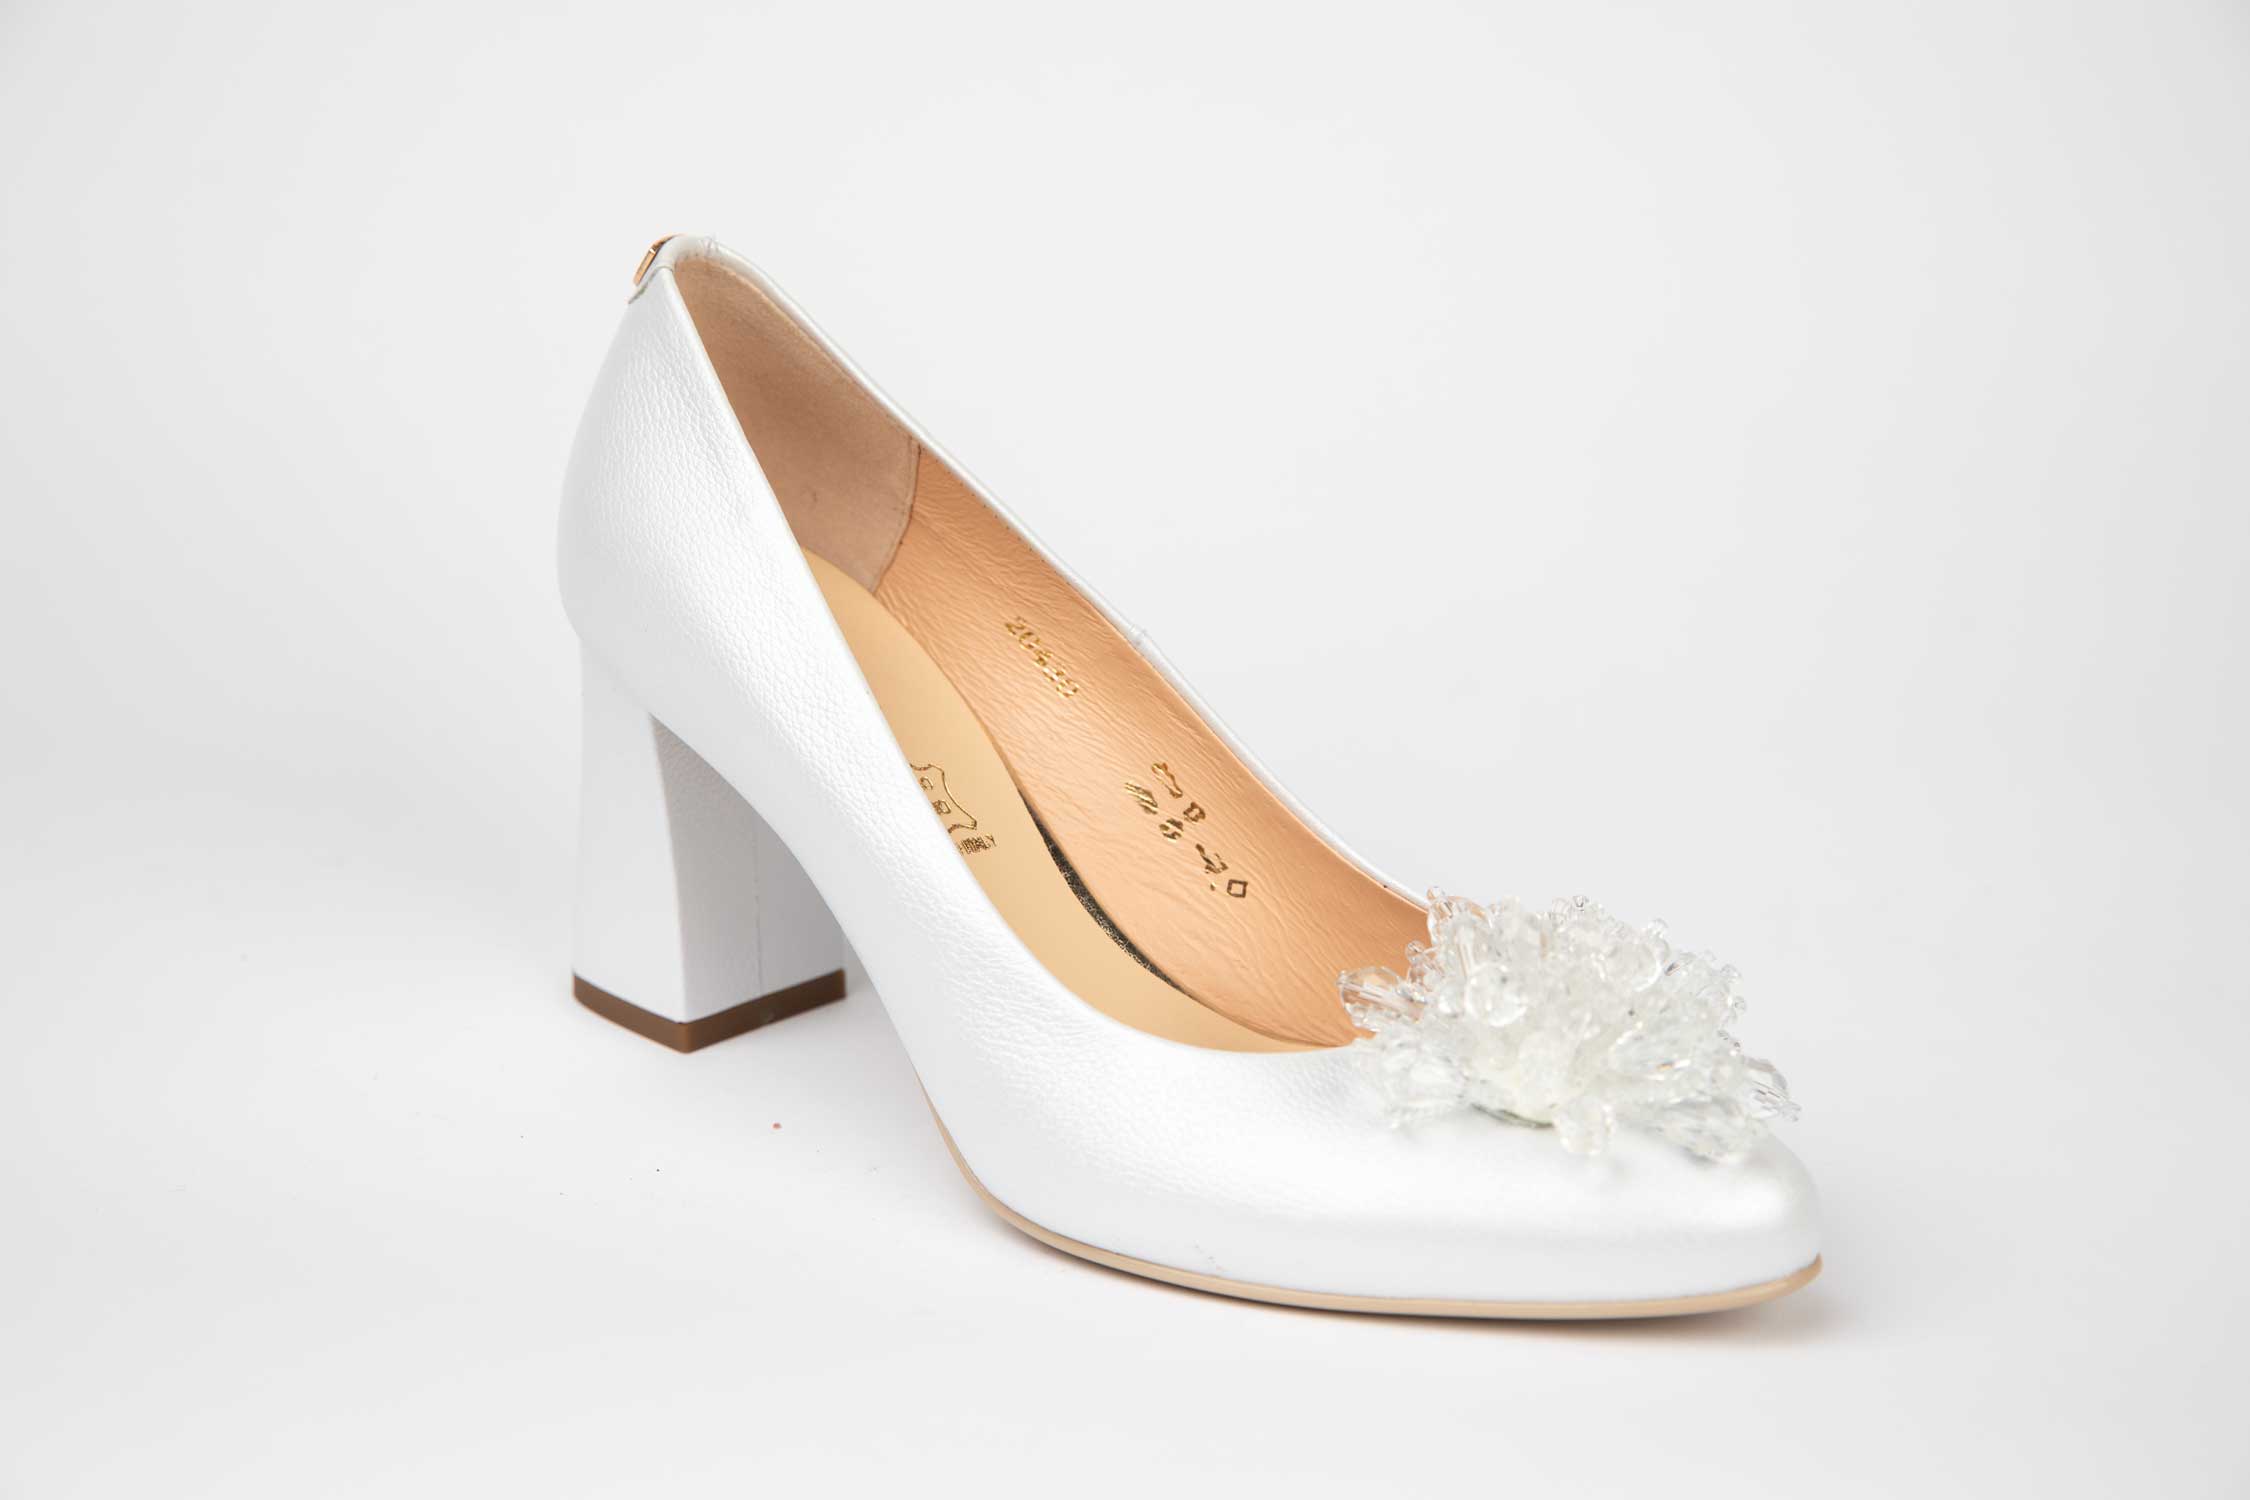 Pantofi dama eleganti din piele naturala SALA 20430 alb